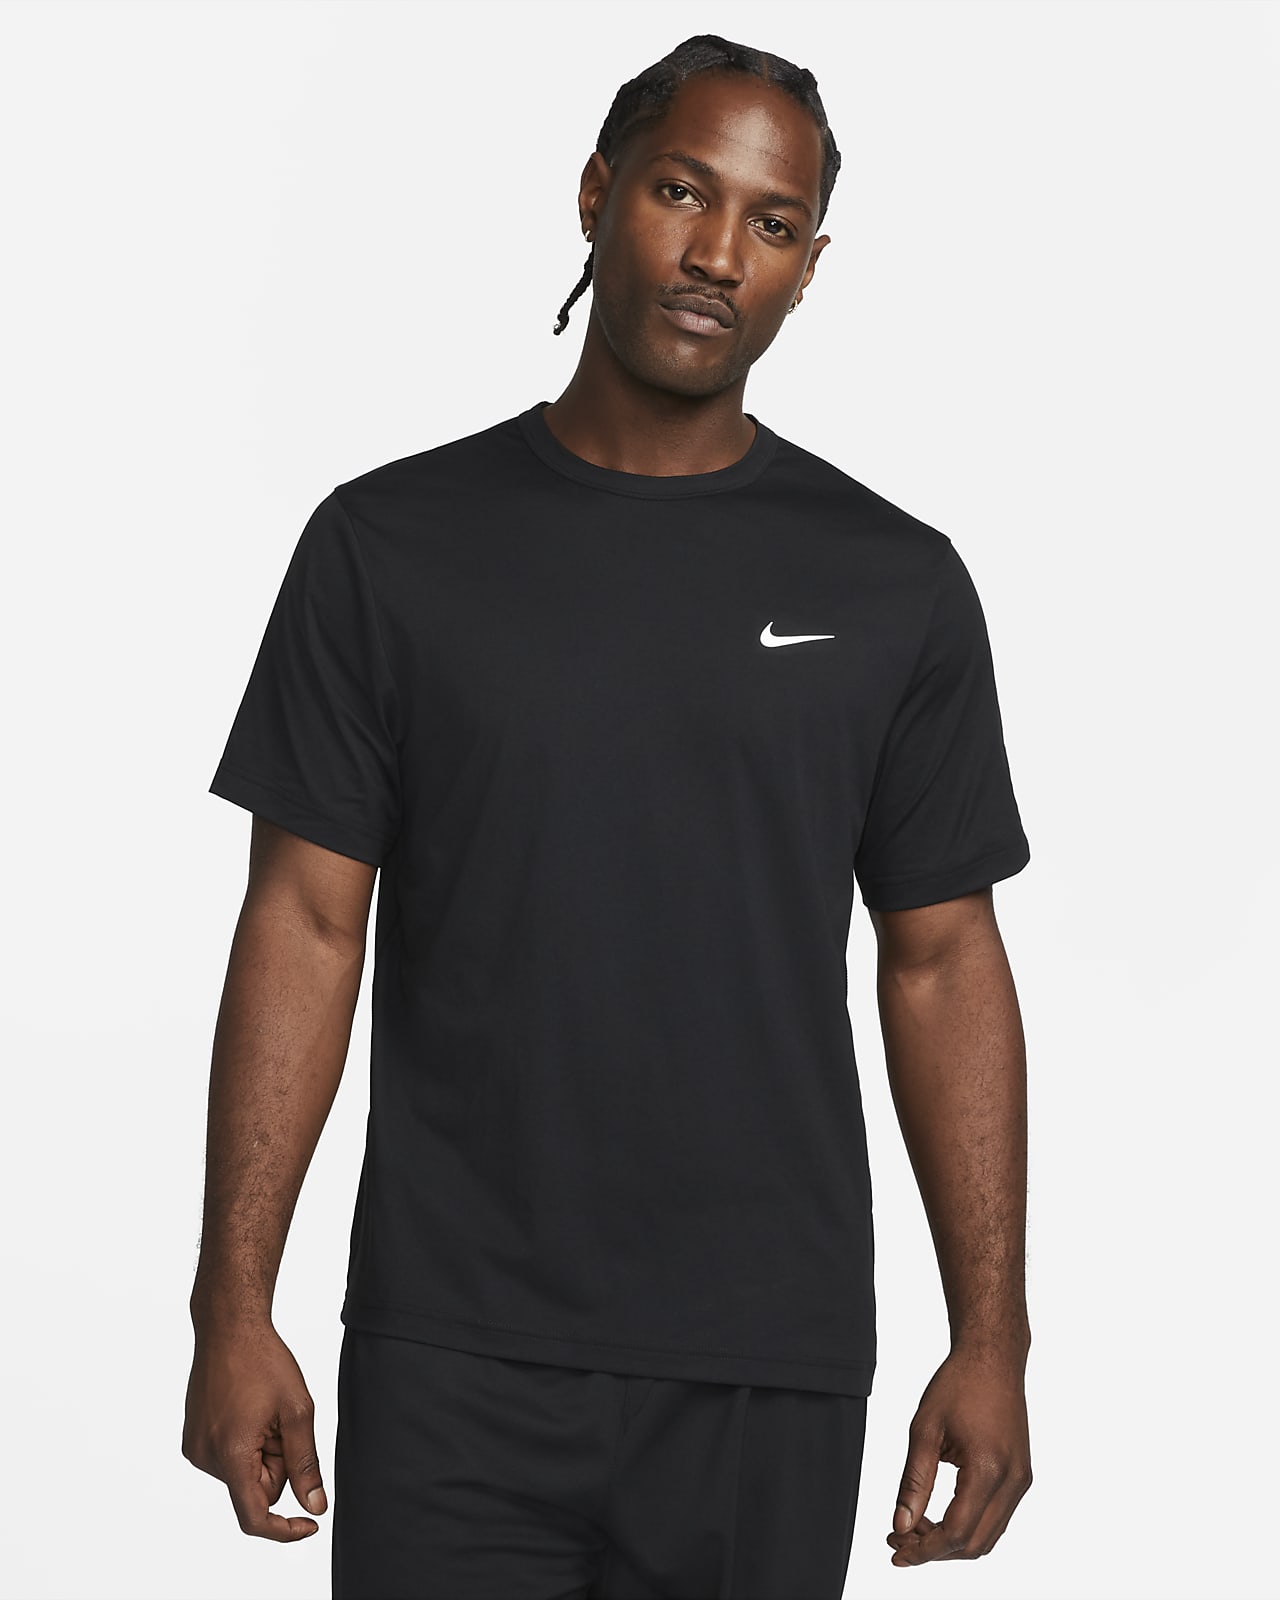 Nike Dri-FIT UV Hyverse Men's Short-Sleeve Fitness Top. Nike RO